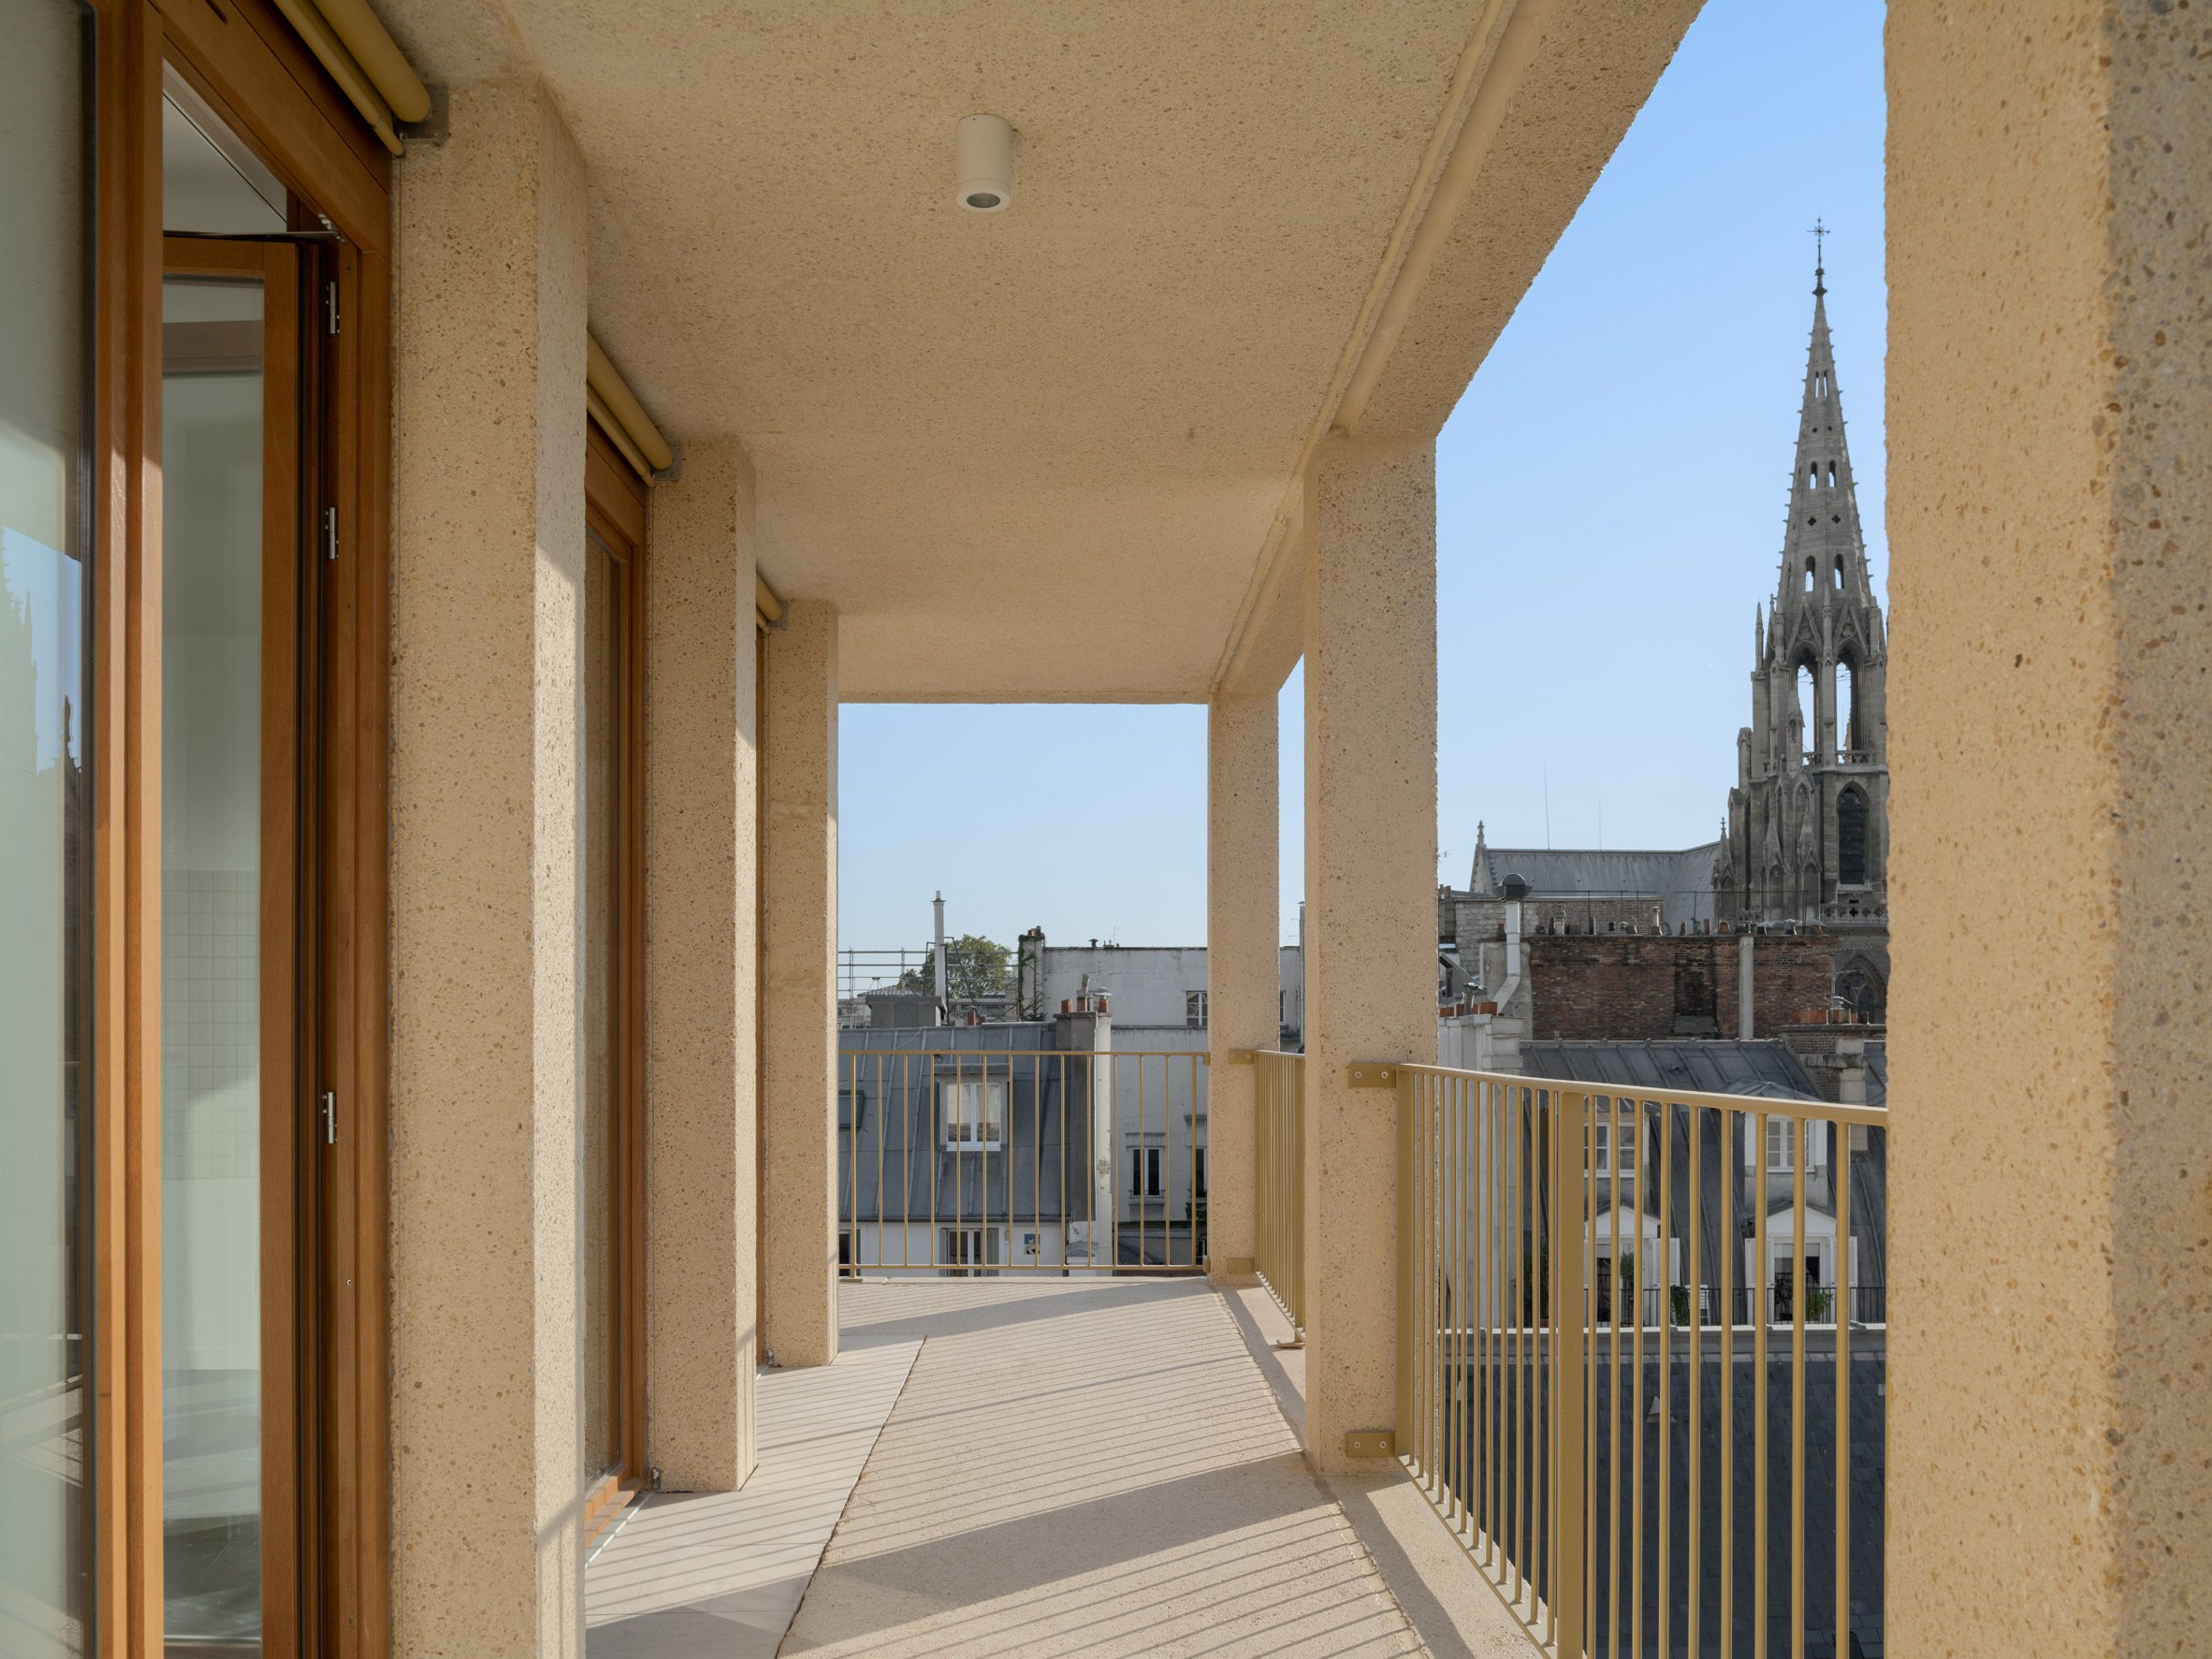 Apartment balcony within Îlot Saint-Germain housing block